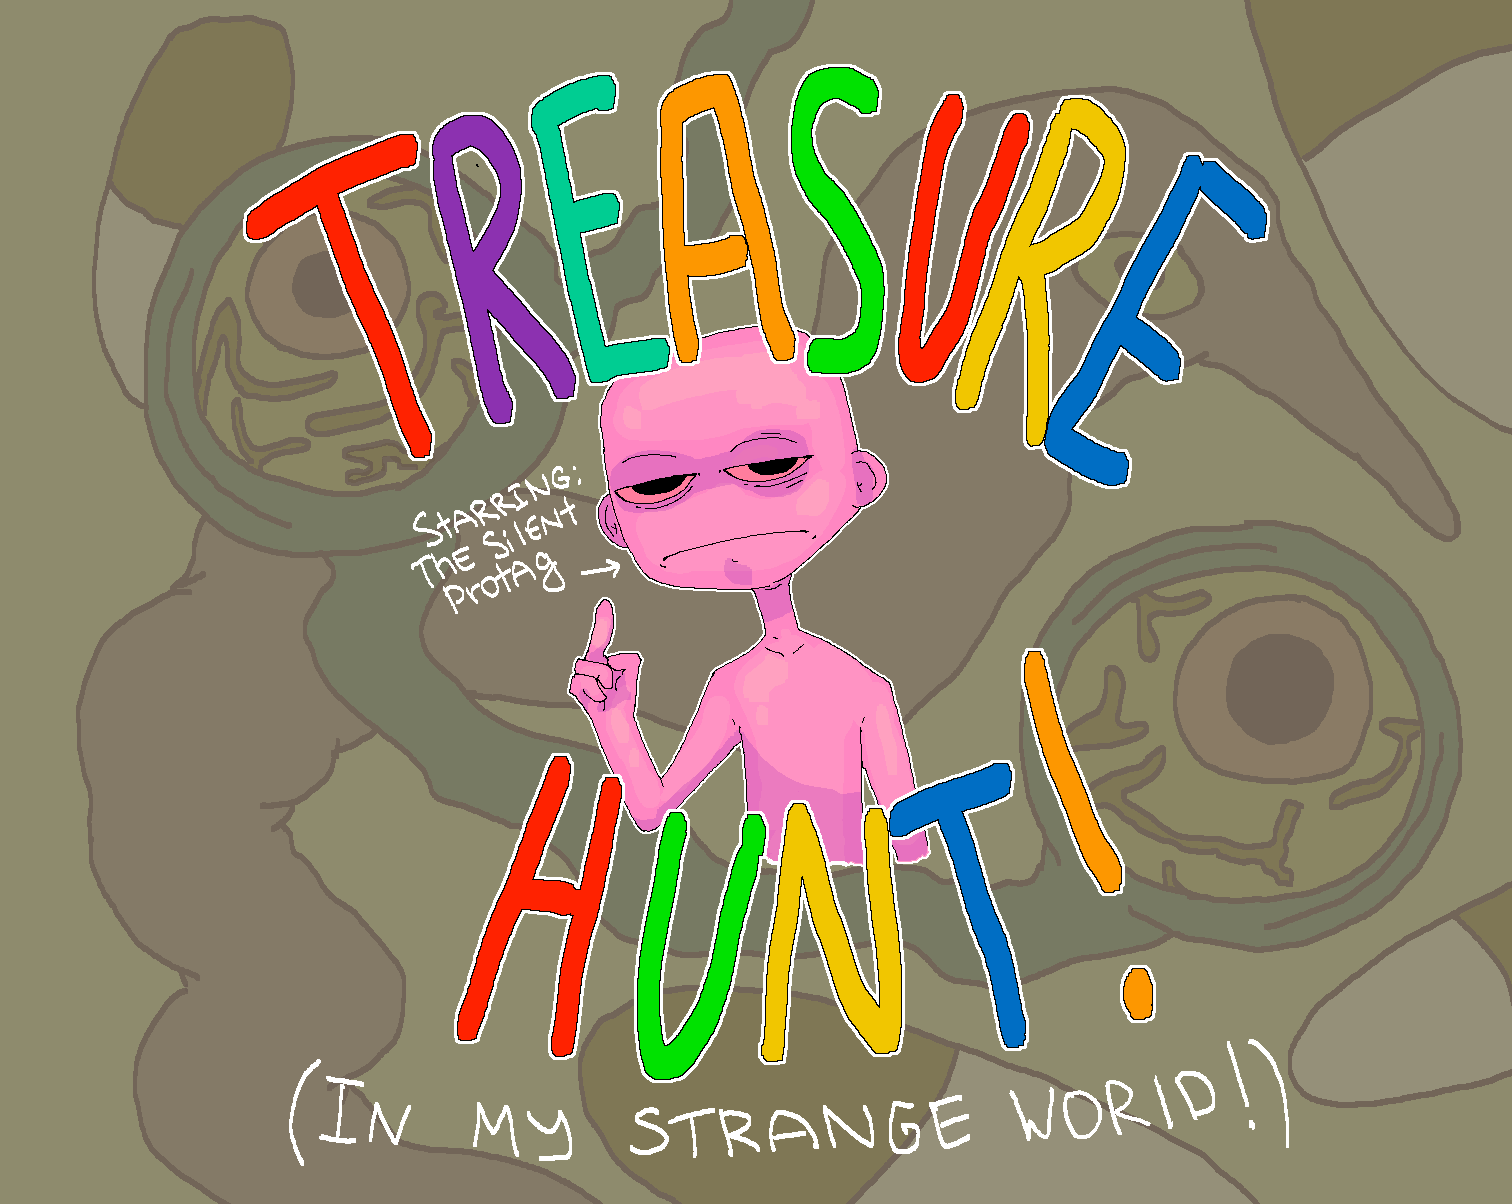 Treasure Hunt (in my strange world!)